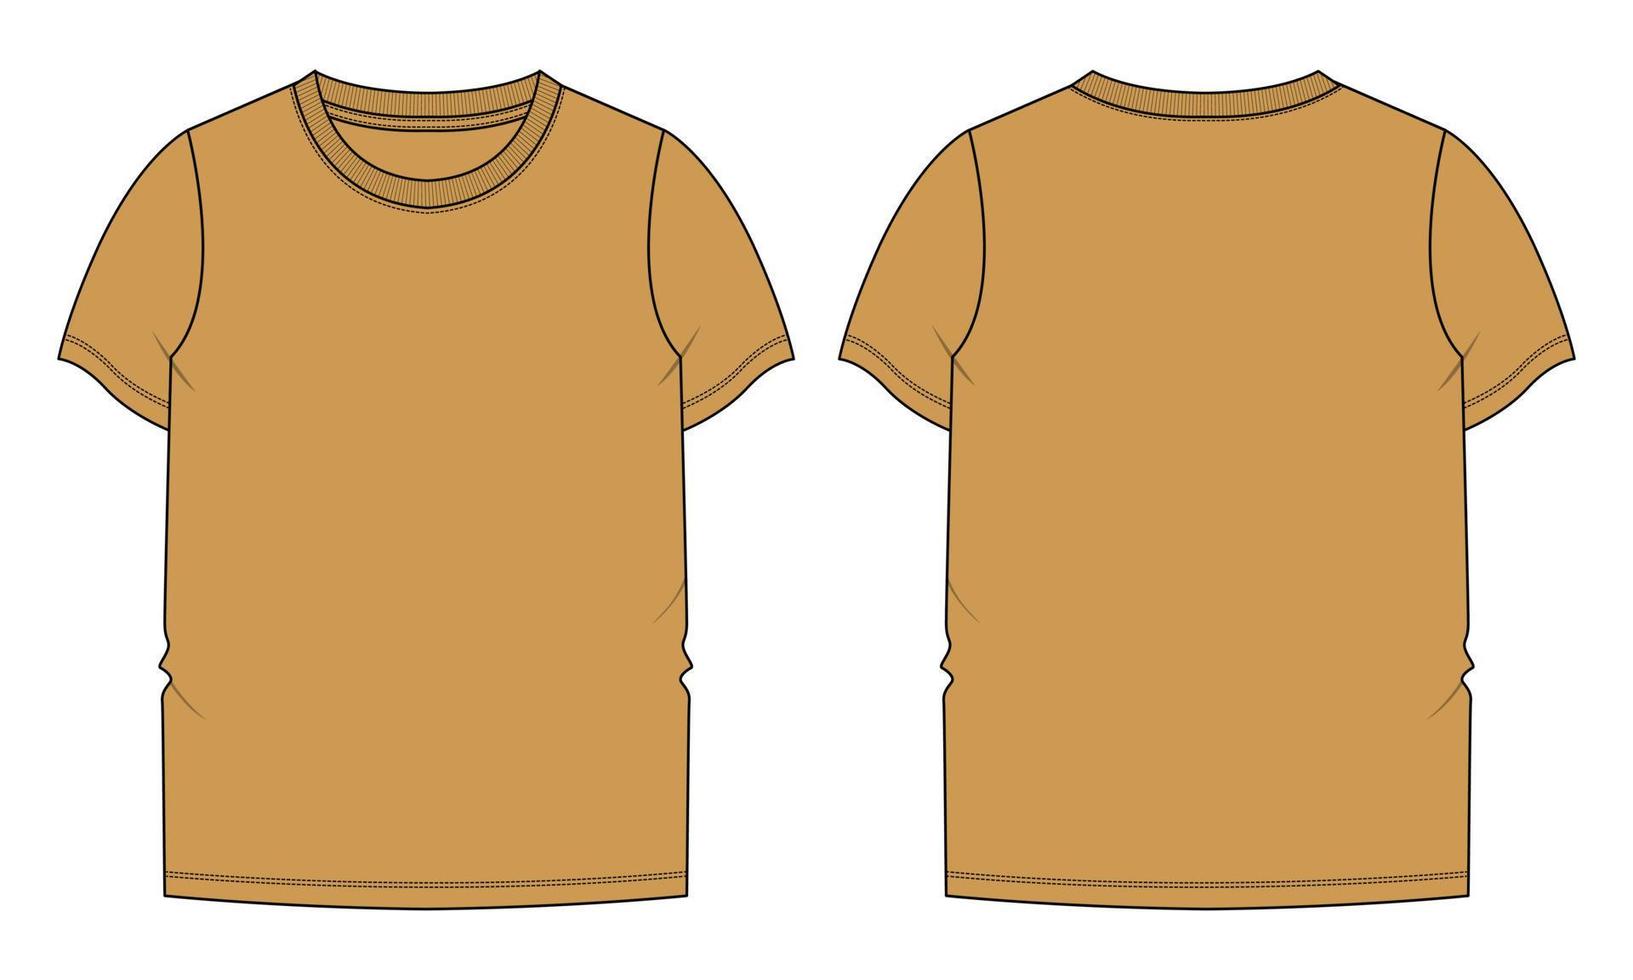 camiseta de manga corta moda técnica boceto plano ilustración vectorial plantilla de color amarillo vector